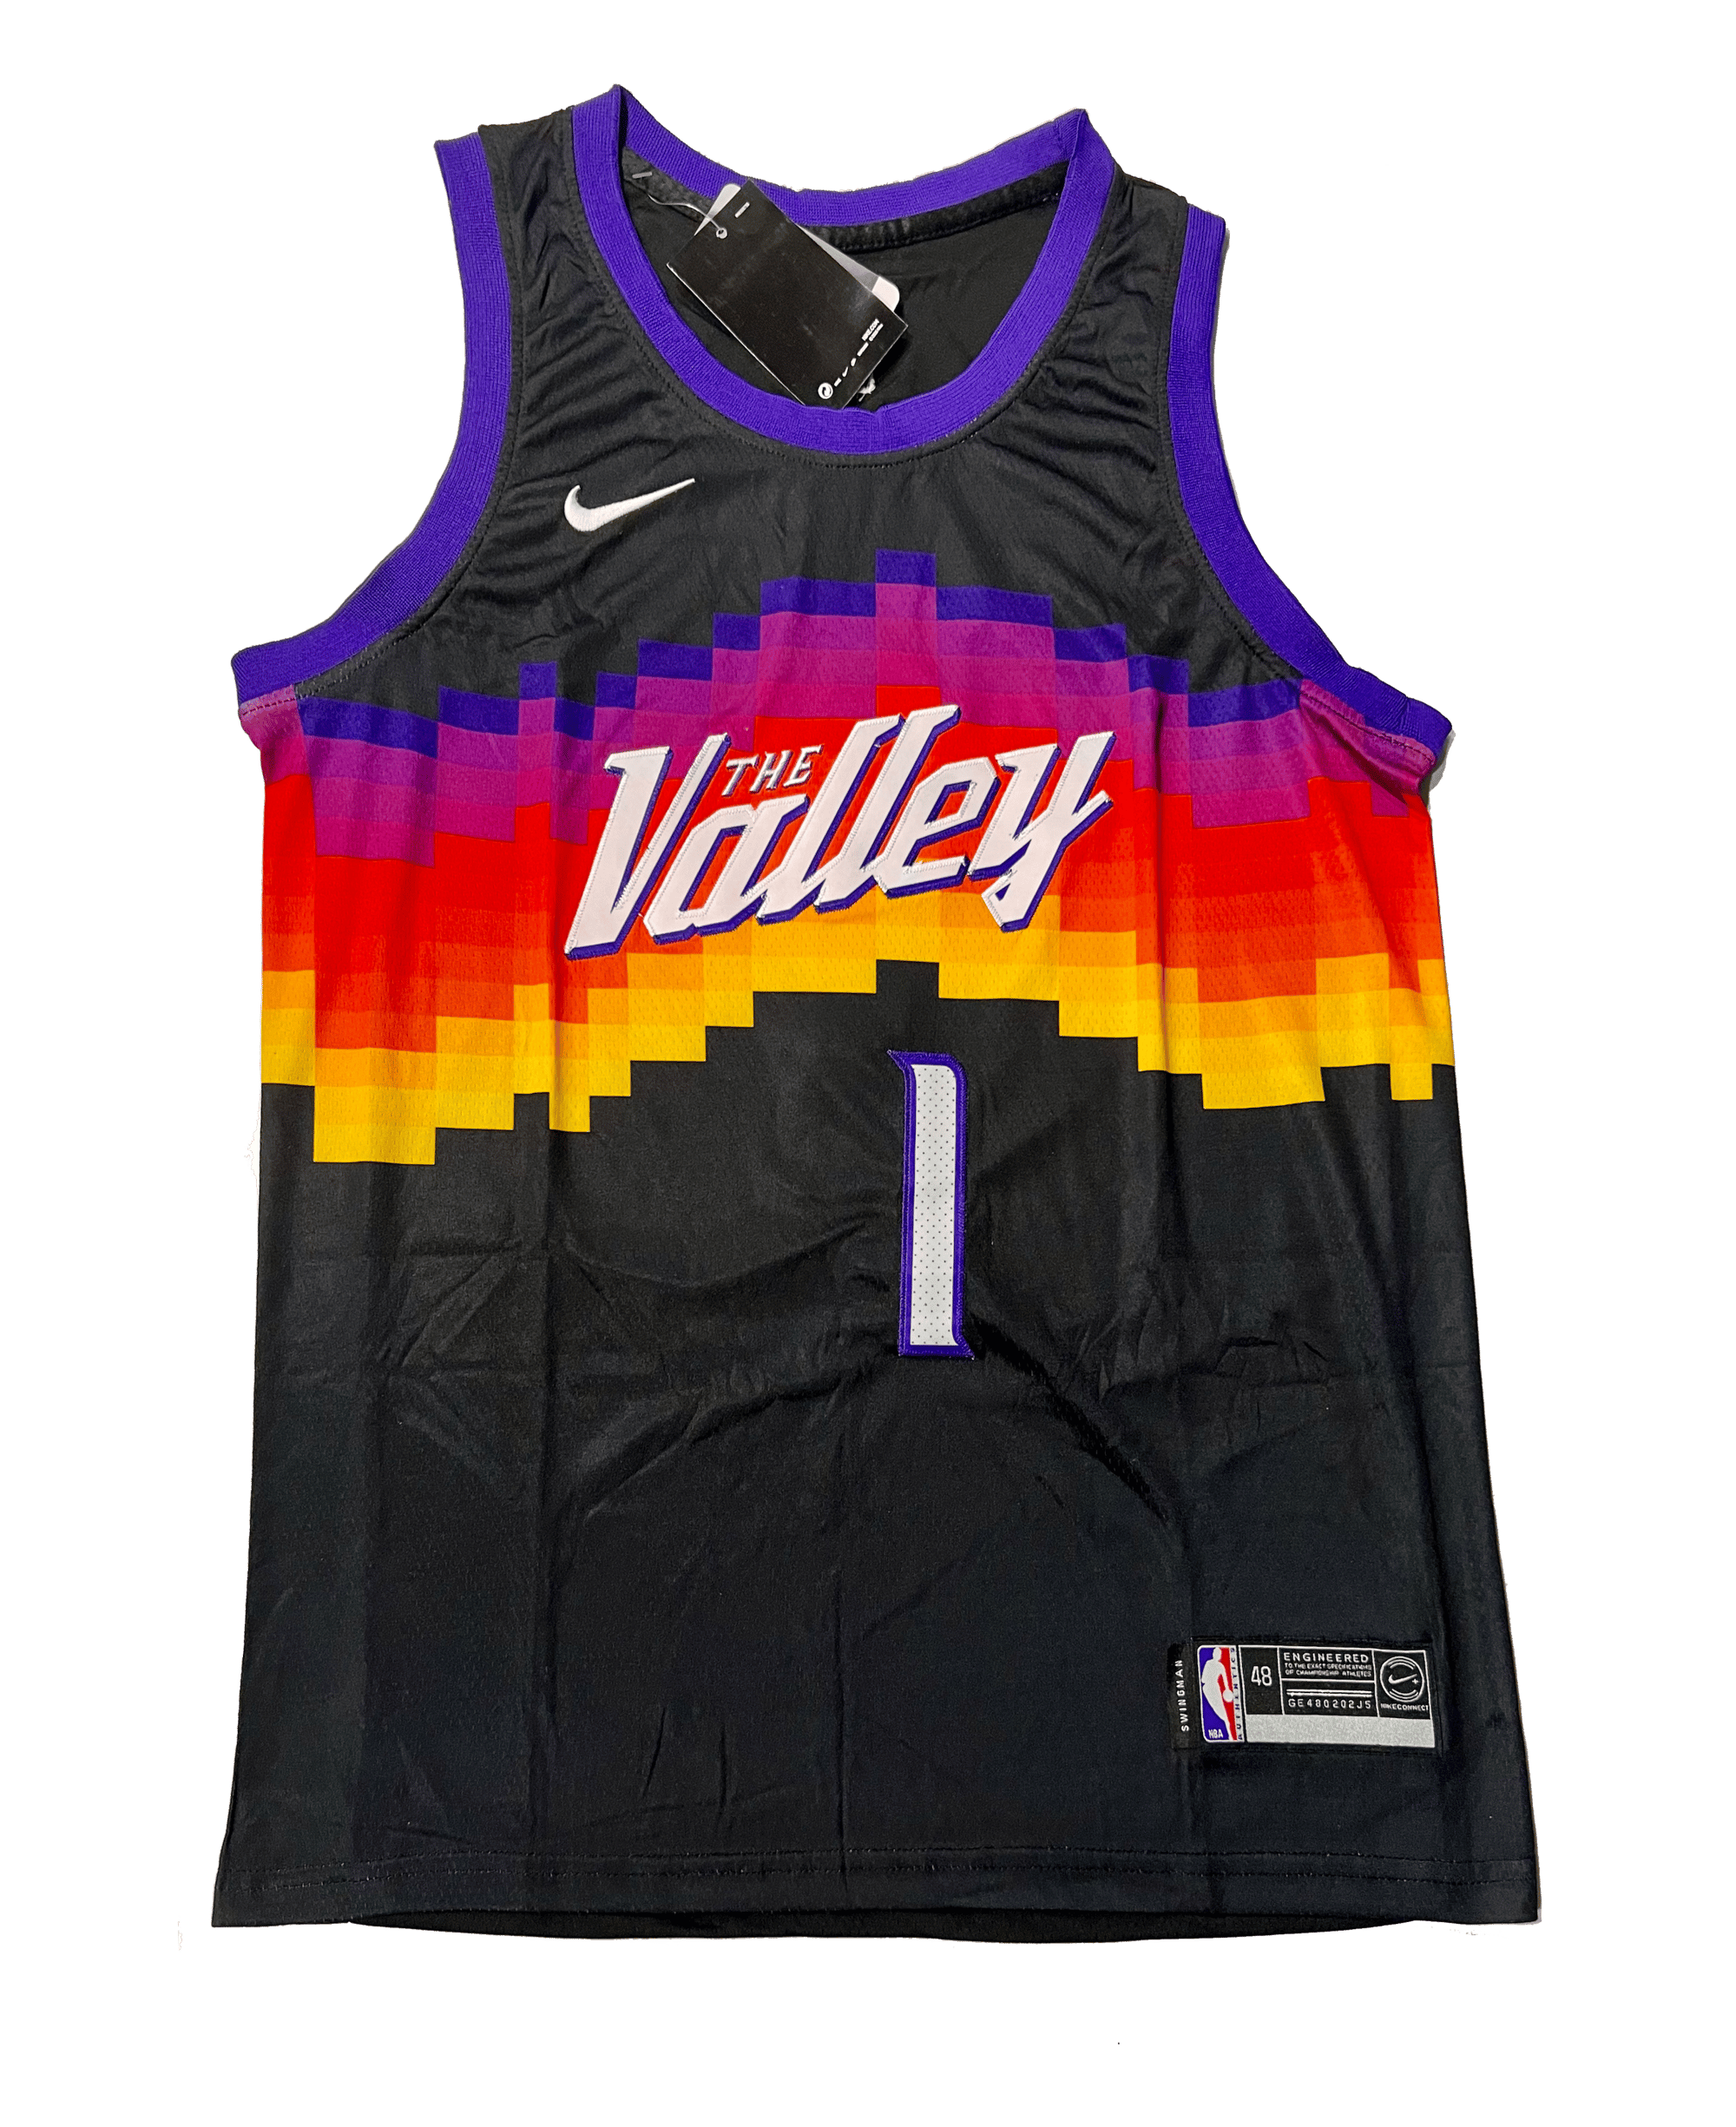 Devin Booker Phoenix Suns new Nike jersey dbook for Sale in